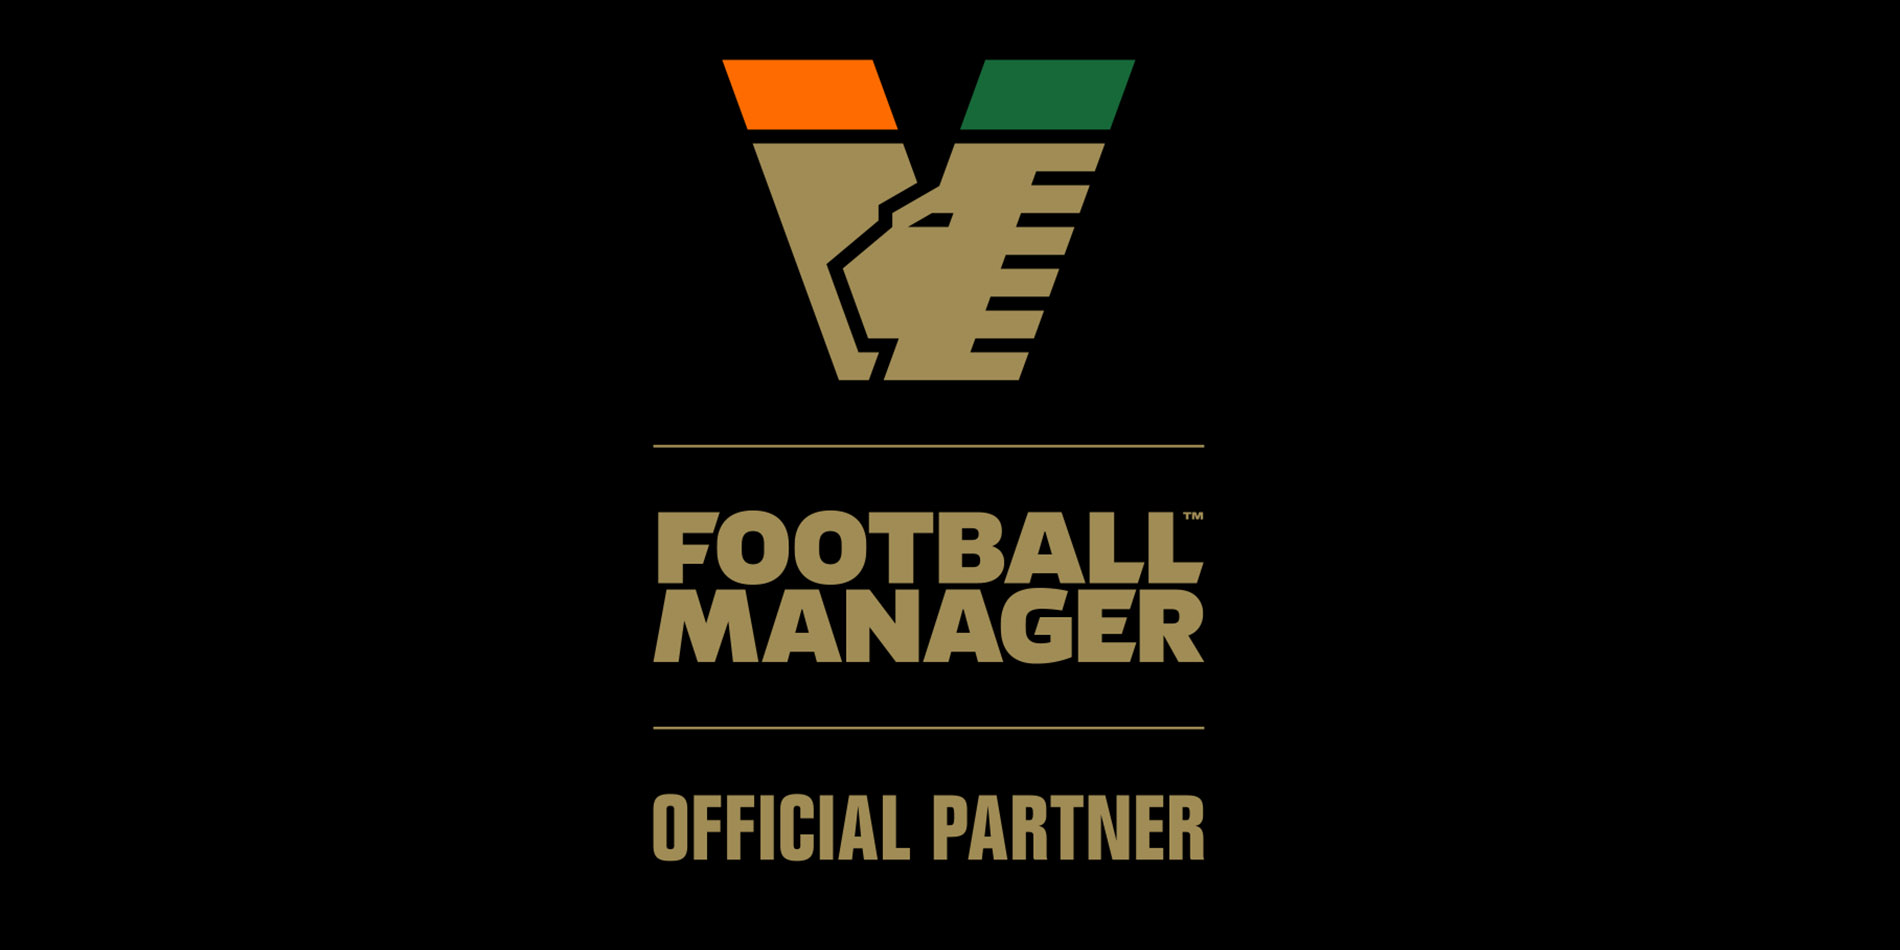 Football Manager continue as Venezia Football Club Official Partner